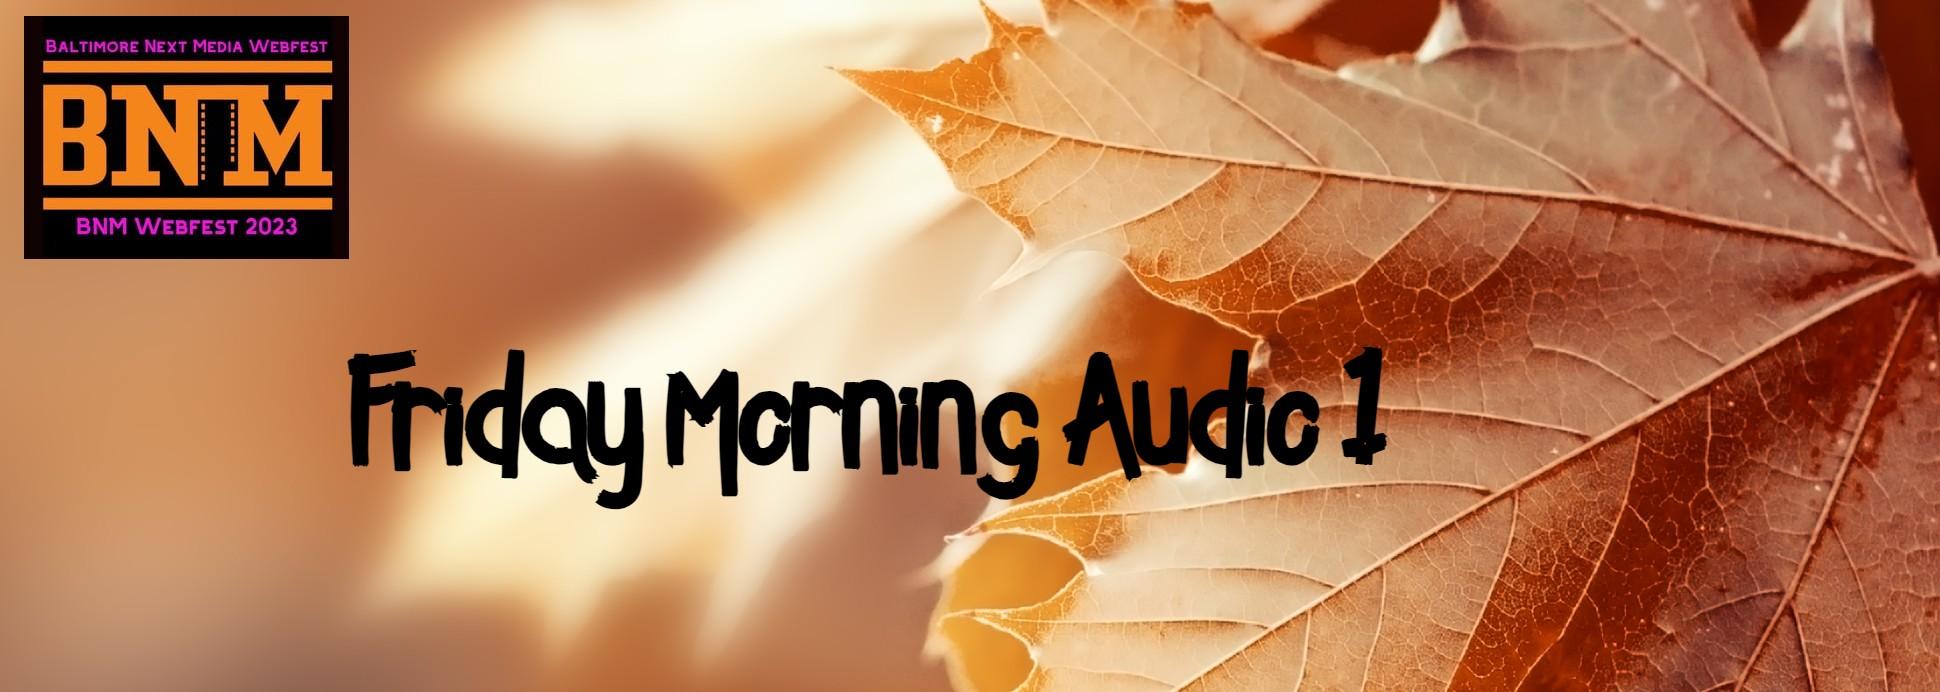 Friday Morning Audio Adventures